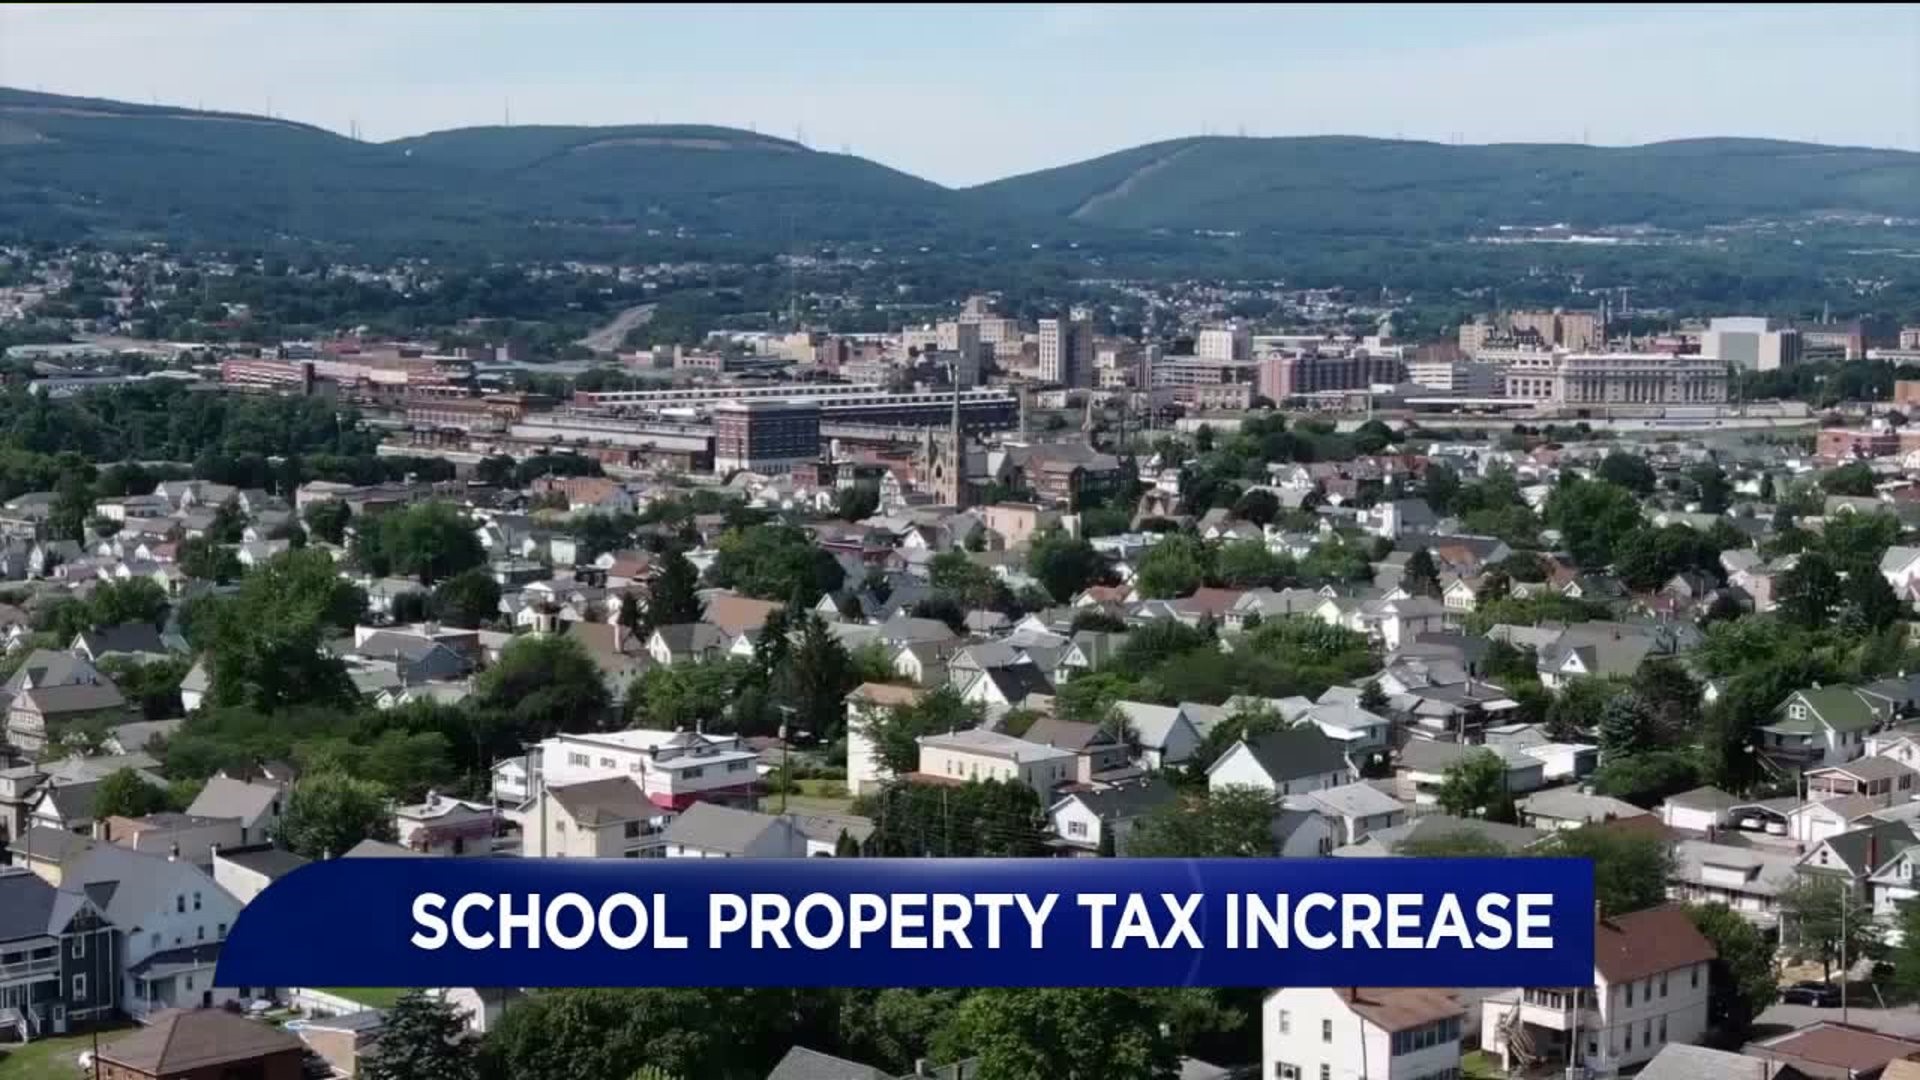 School Property Tax Increase Approved in Scranton